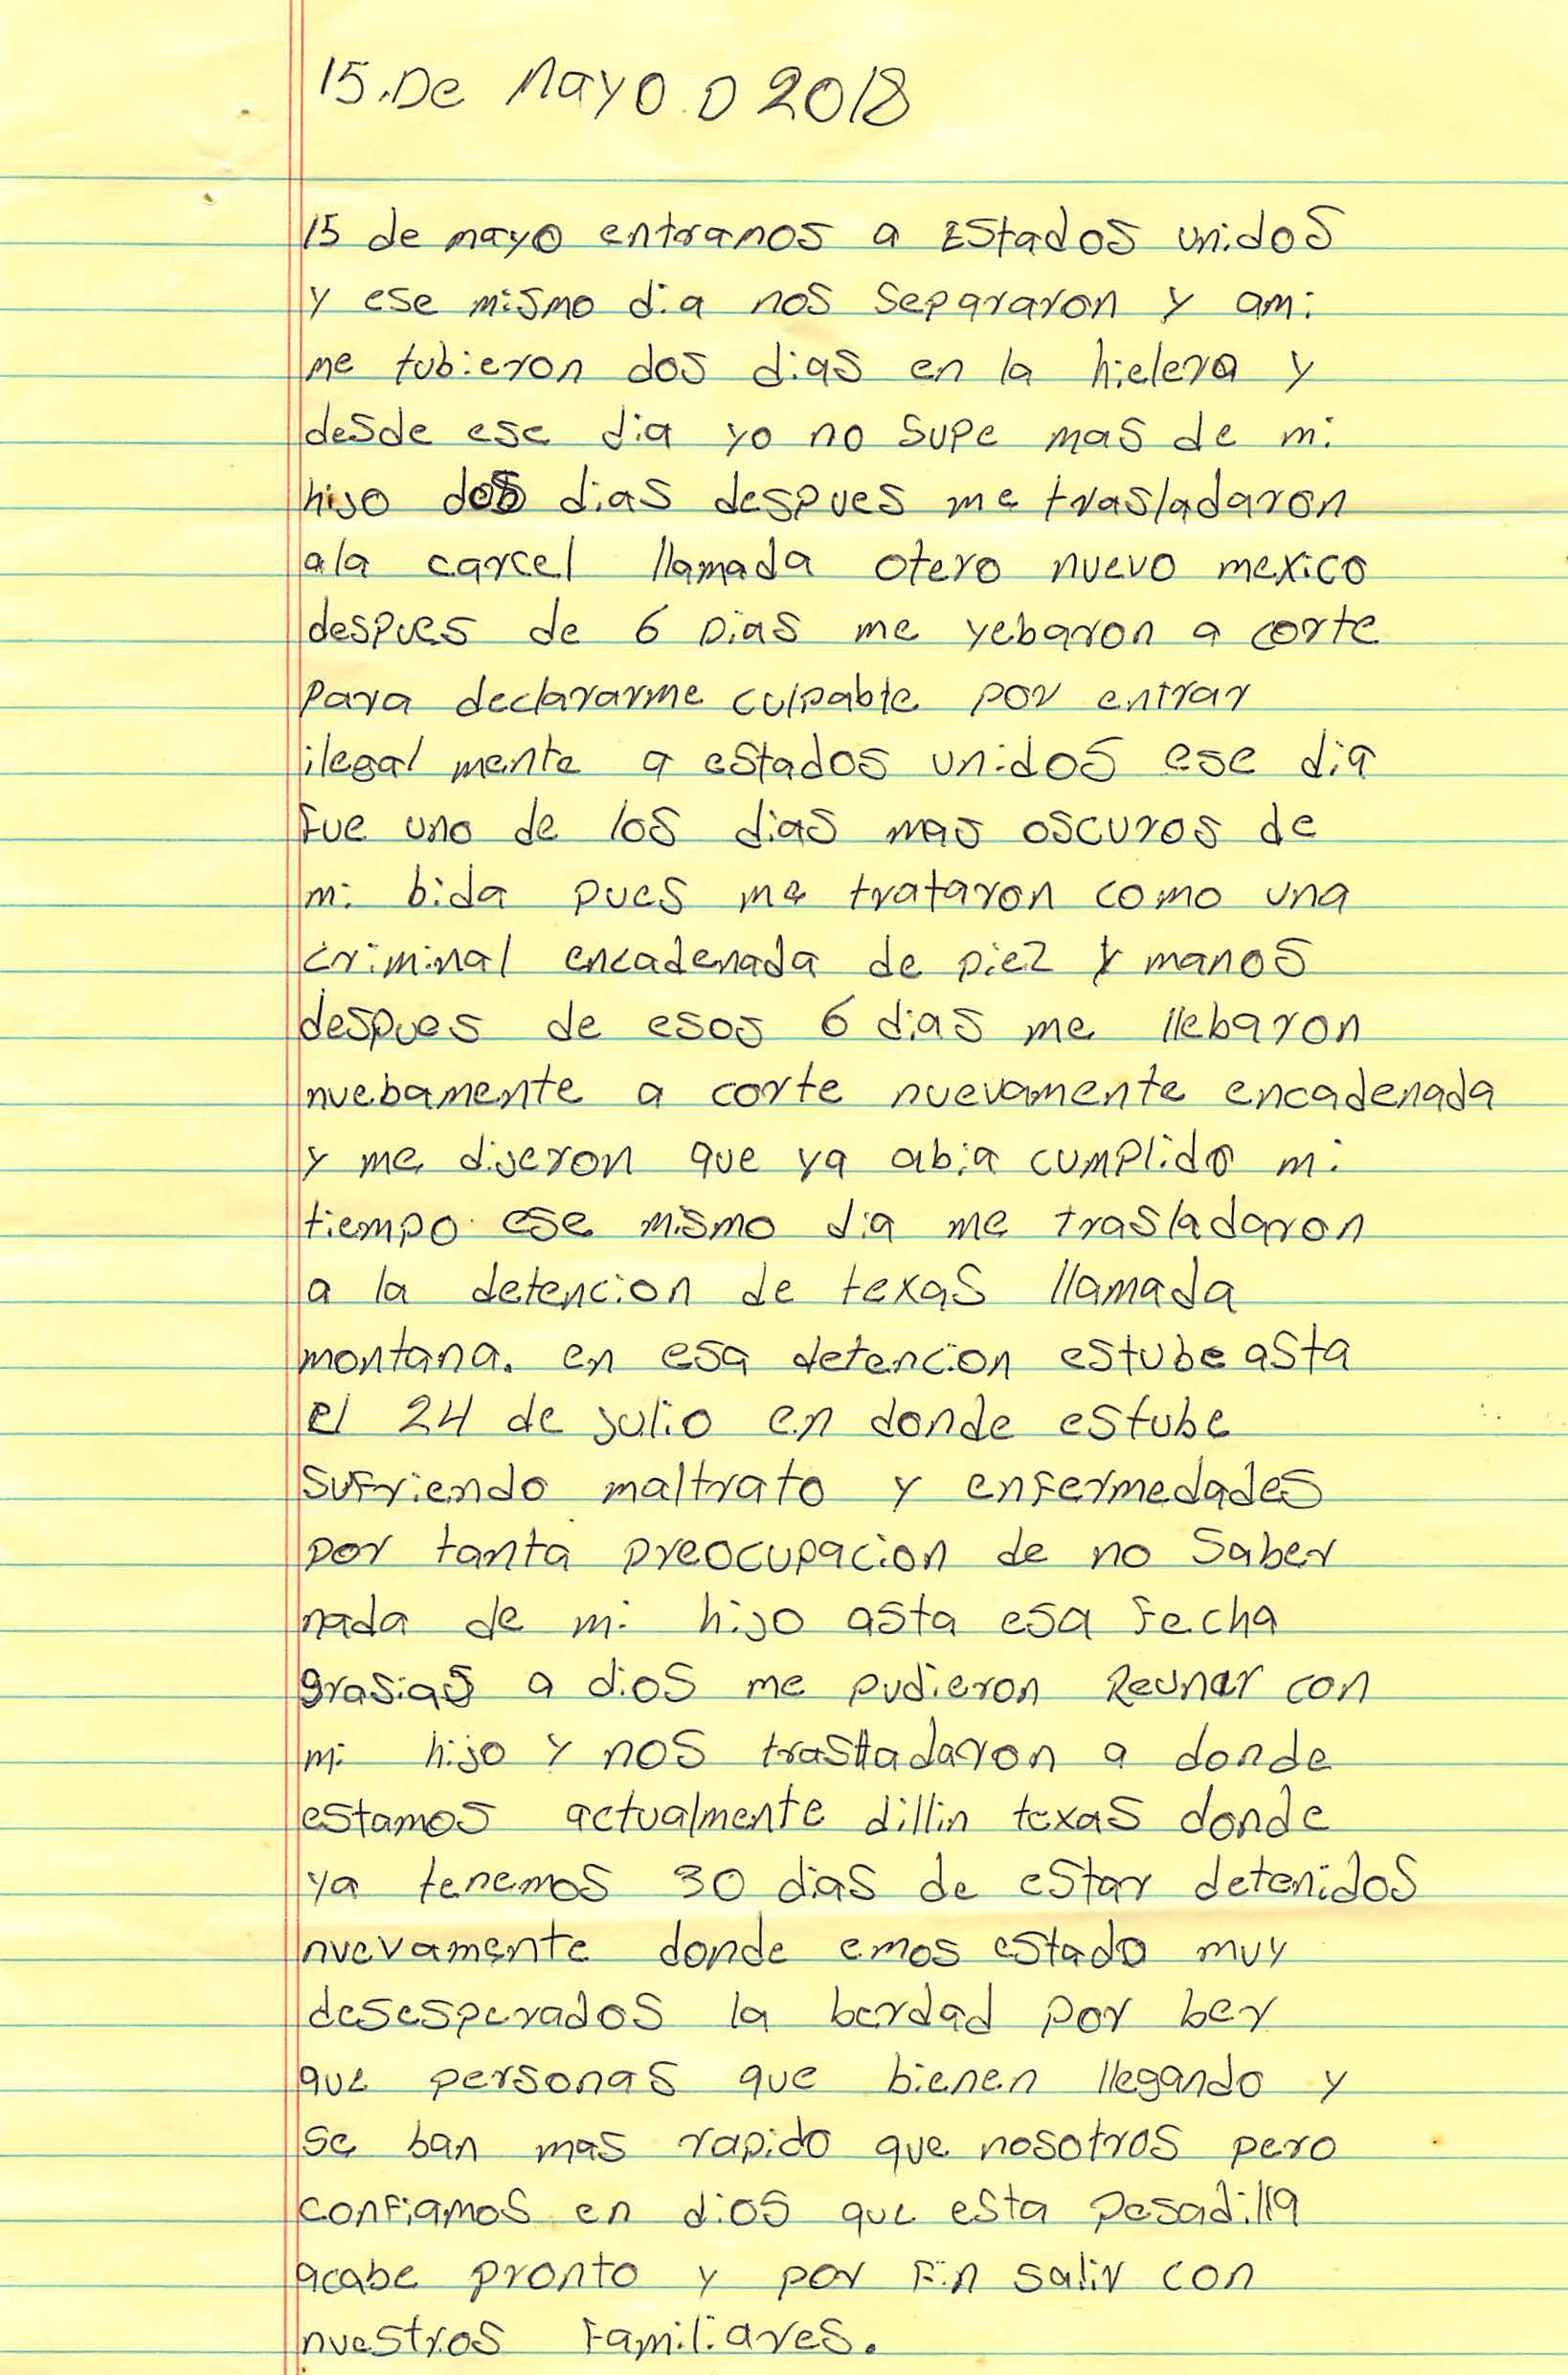 Mariana's Handwritten Letter